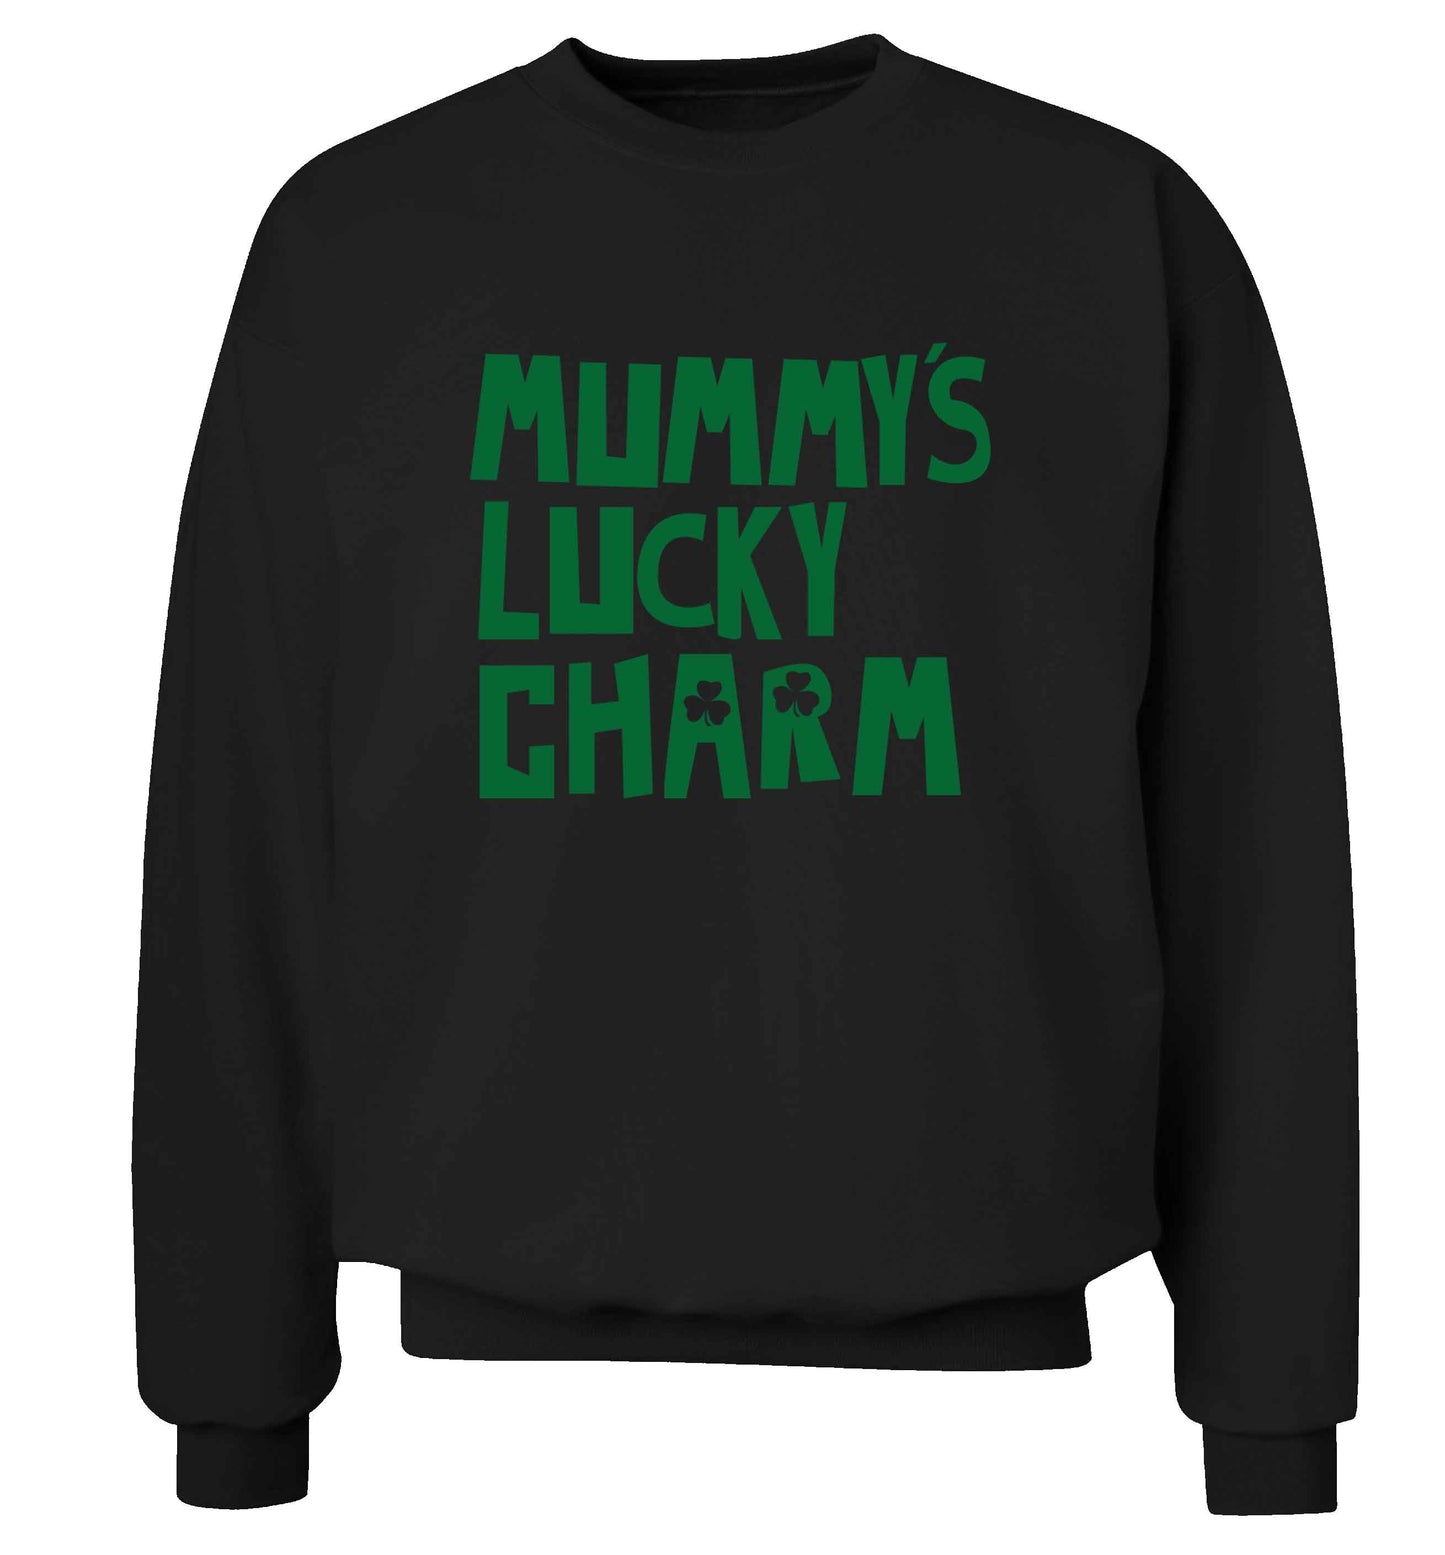 Mummy's lucky charm adult's unisex black sweater 2XL